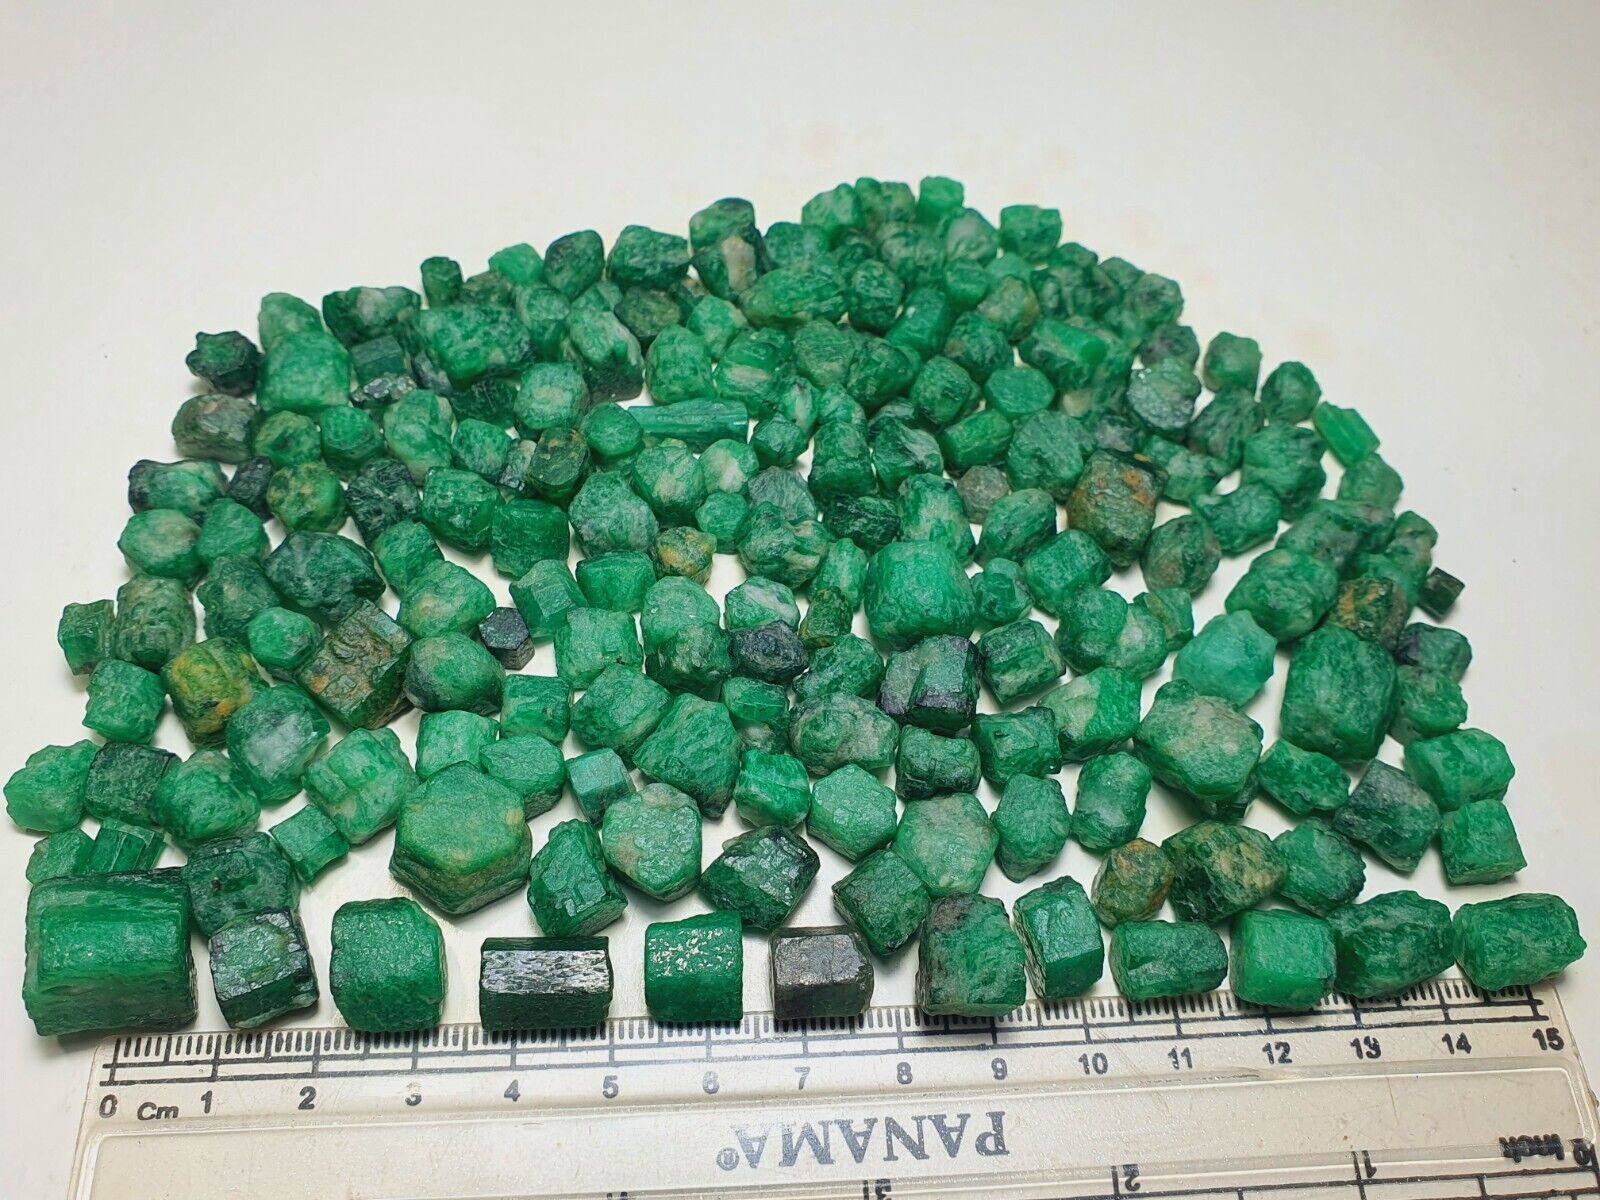 1100-Carat Emerald Crystal Natural good Quality Lot @ Swat Mine Pakistan